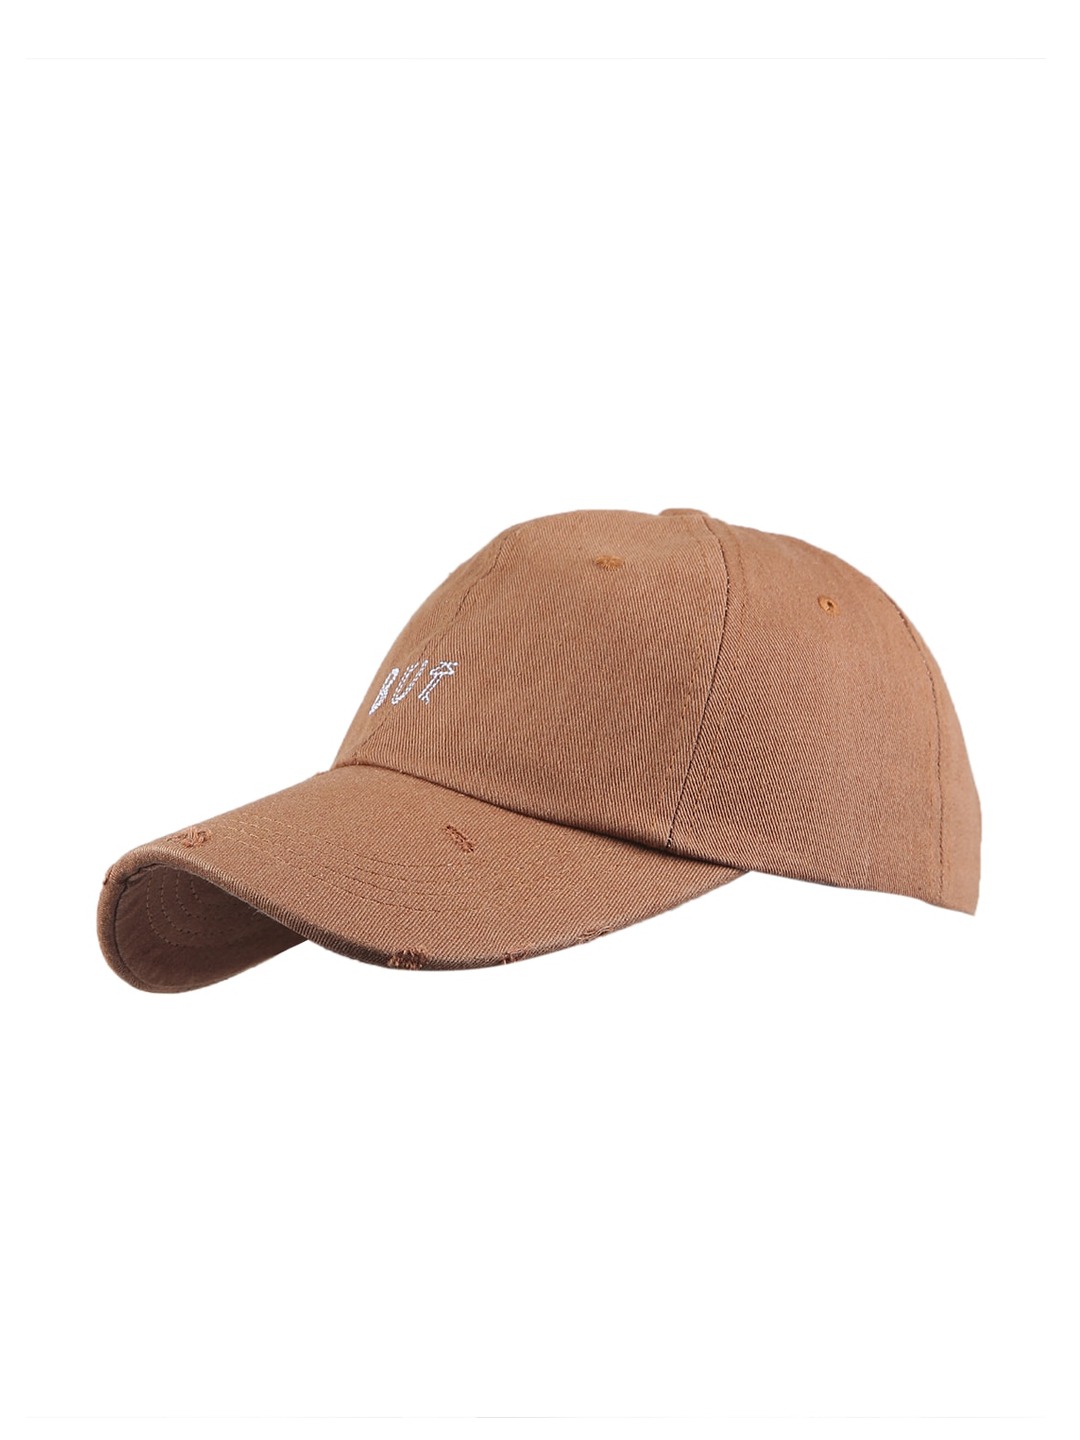 Accessories Hat | Bunnywave Unisex Brown Adjustable Sun Hat - BR97030